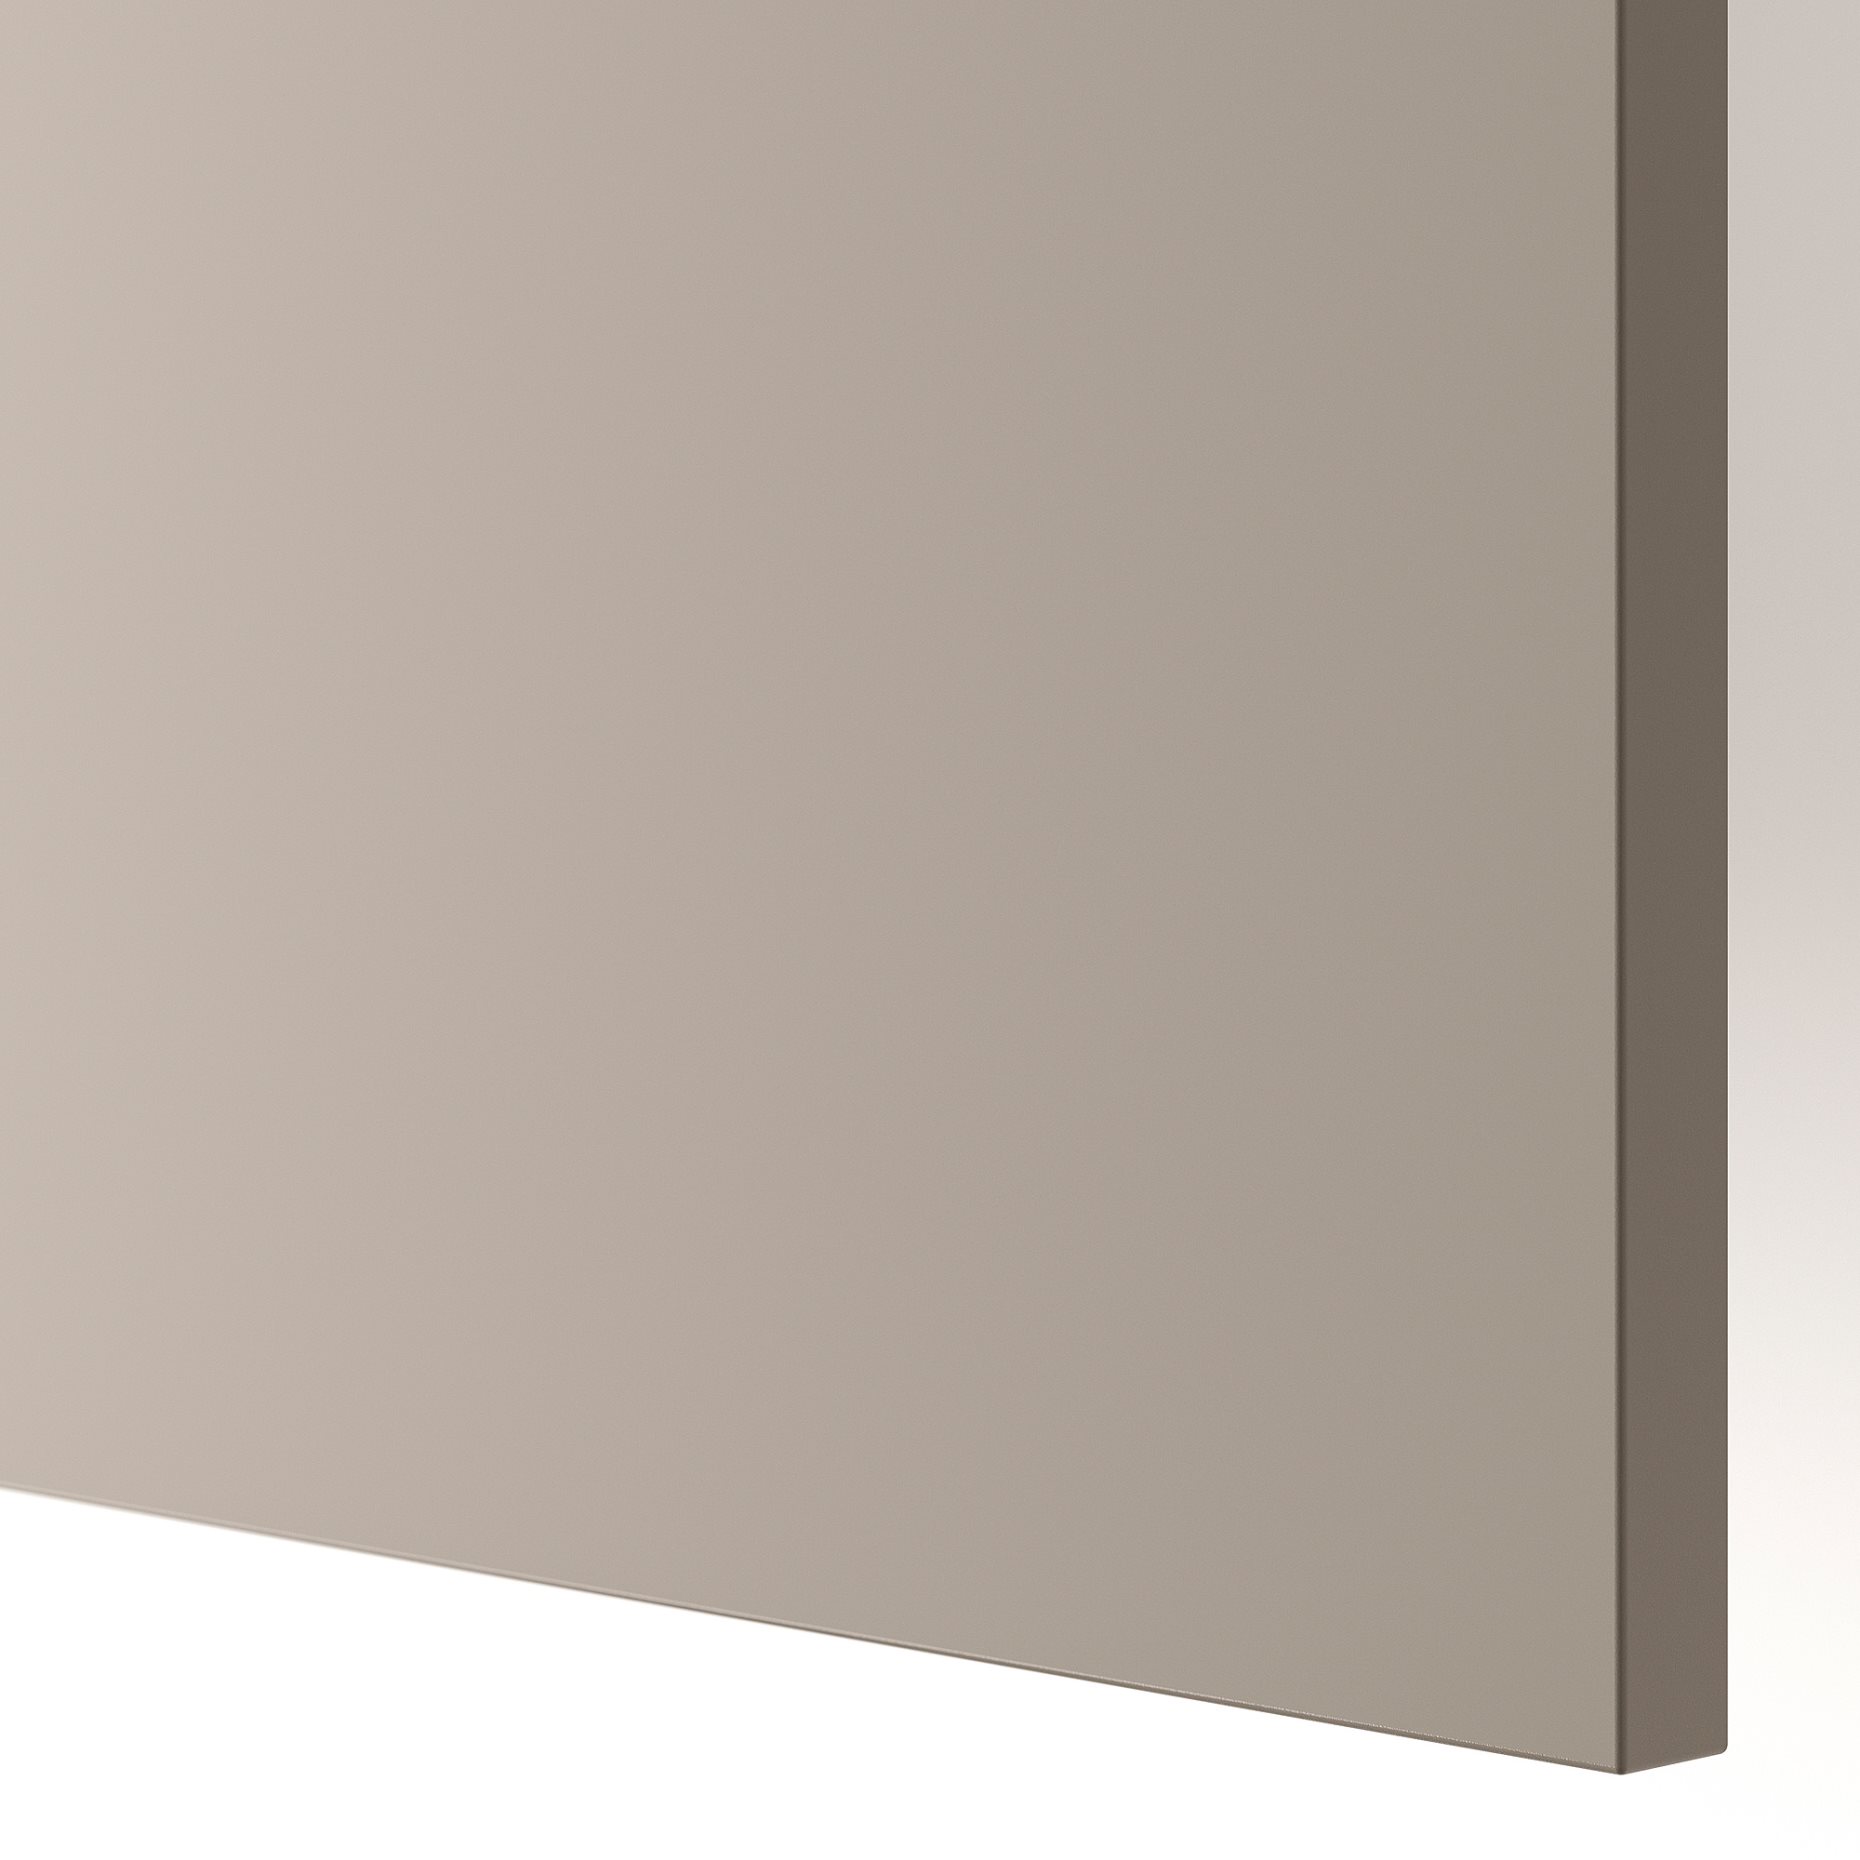 UPPLÖV, πλαϊνή επιφάνεια, 39x240 cm, 904.704.64